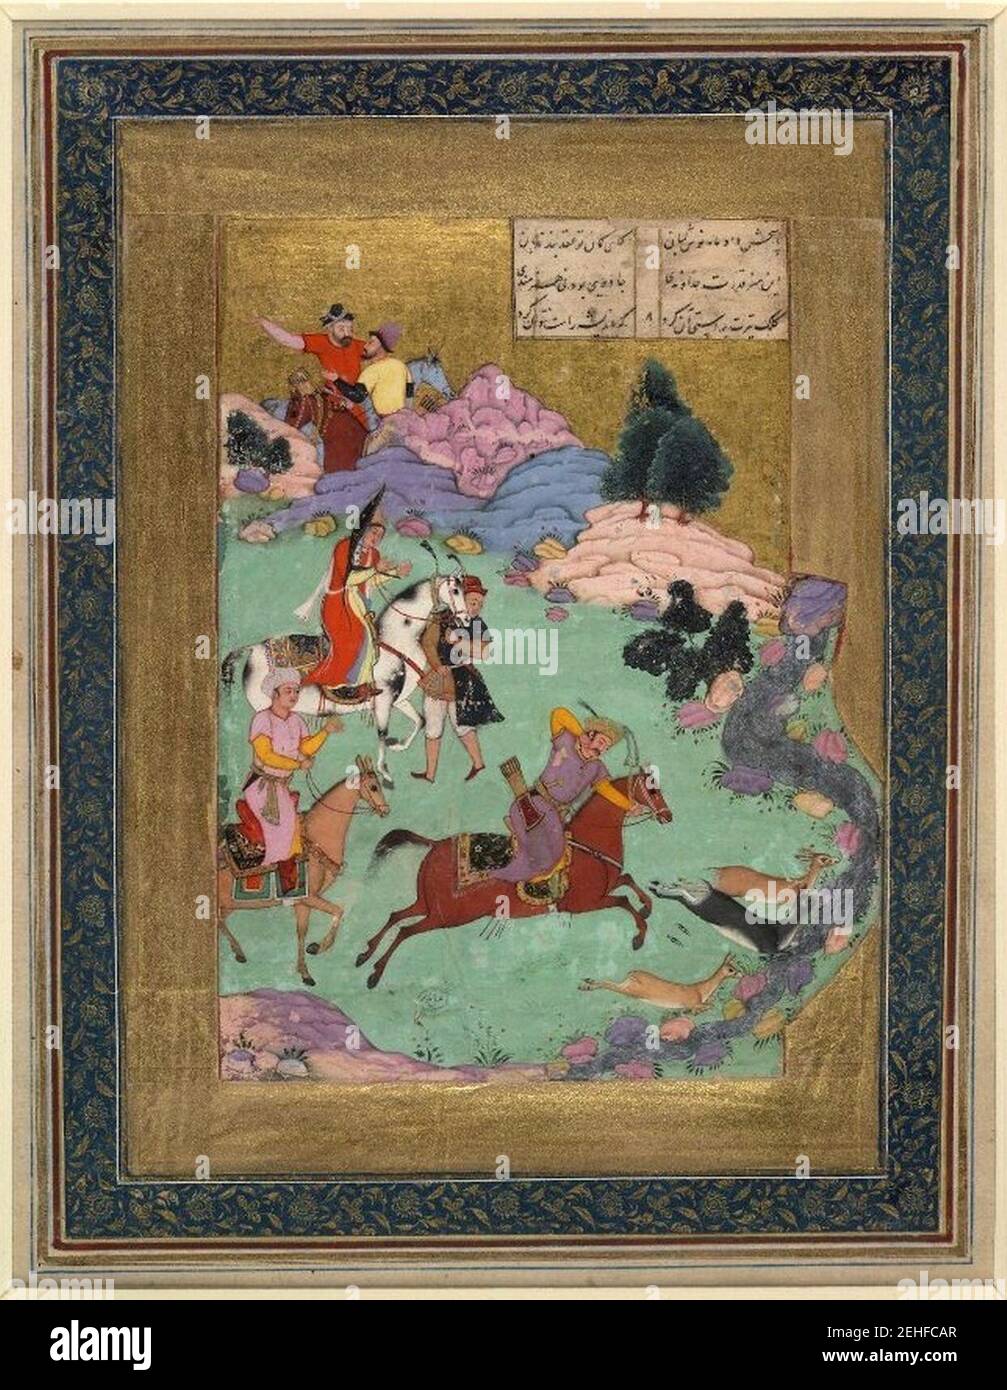 Painting depicts Bahram Gur (central figure) on horseback hunting three doe, from a Khamseh of Amir Khusrau Dihlavi.. Stock Photo